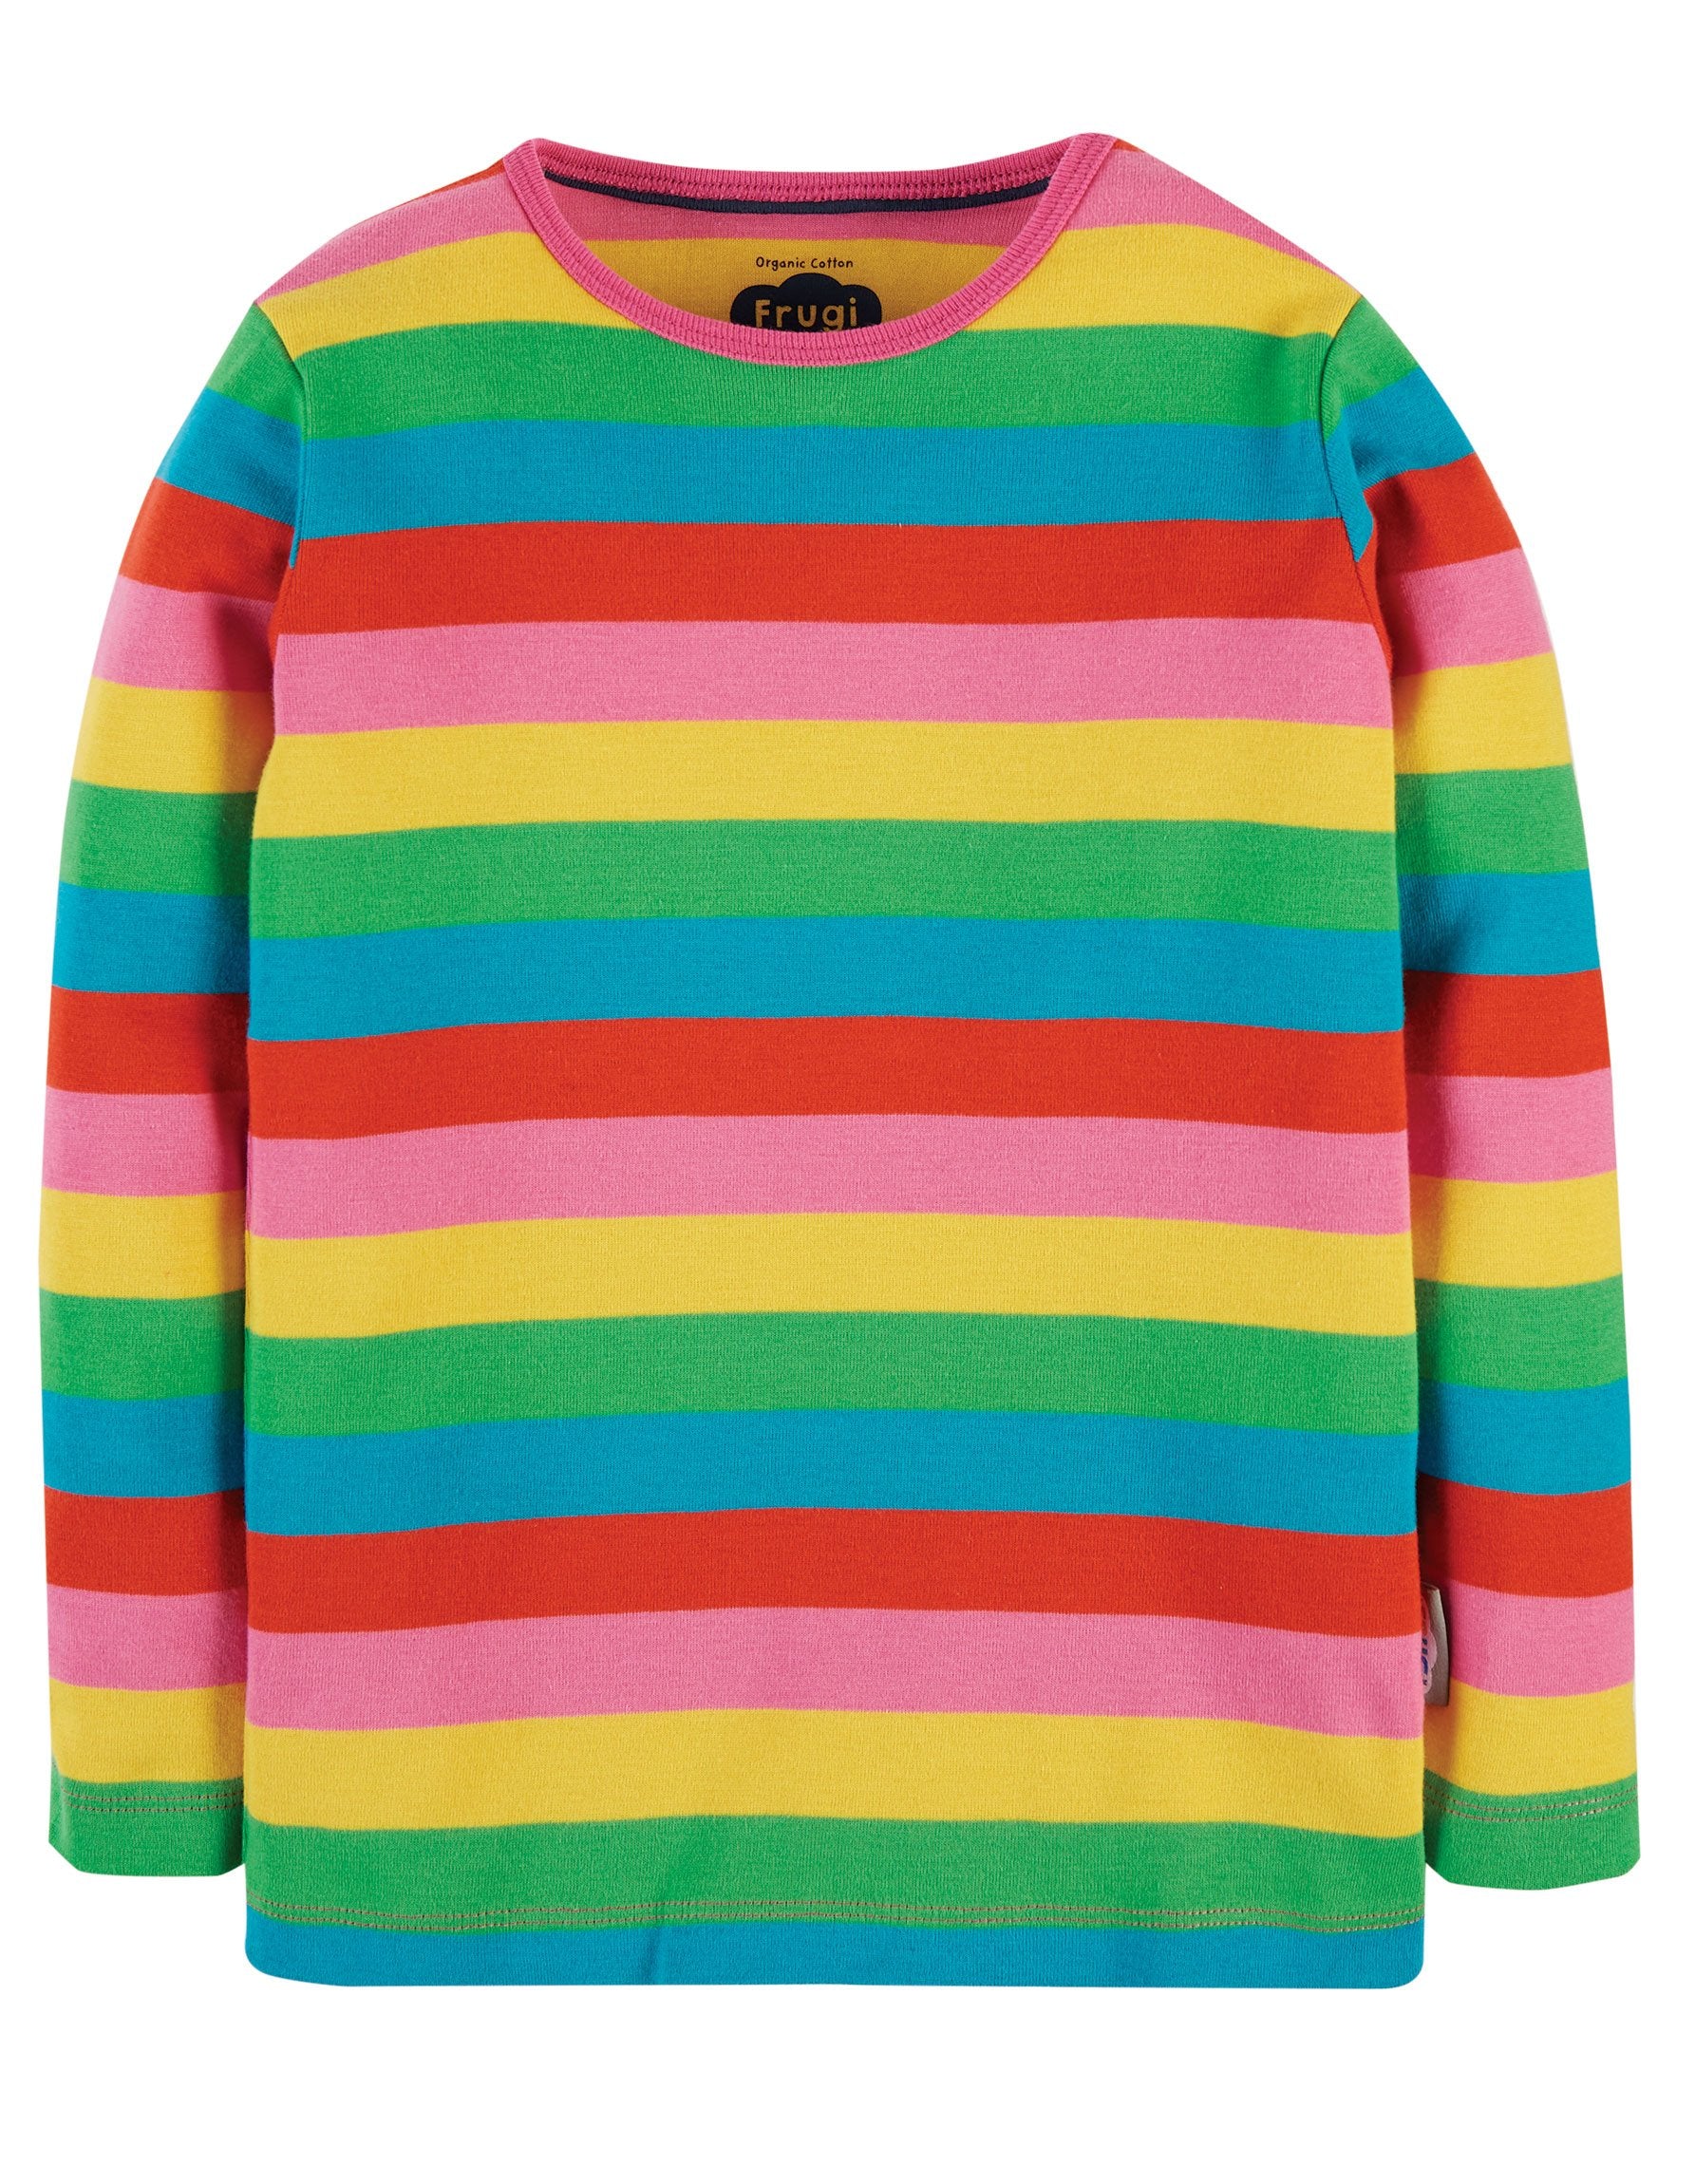 New Release Frugi Favourite Long Sleeve T-Shirt Foxglove Rainbow Stripe - The Thrifty Stork